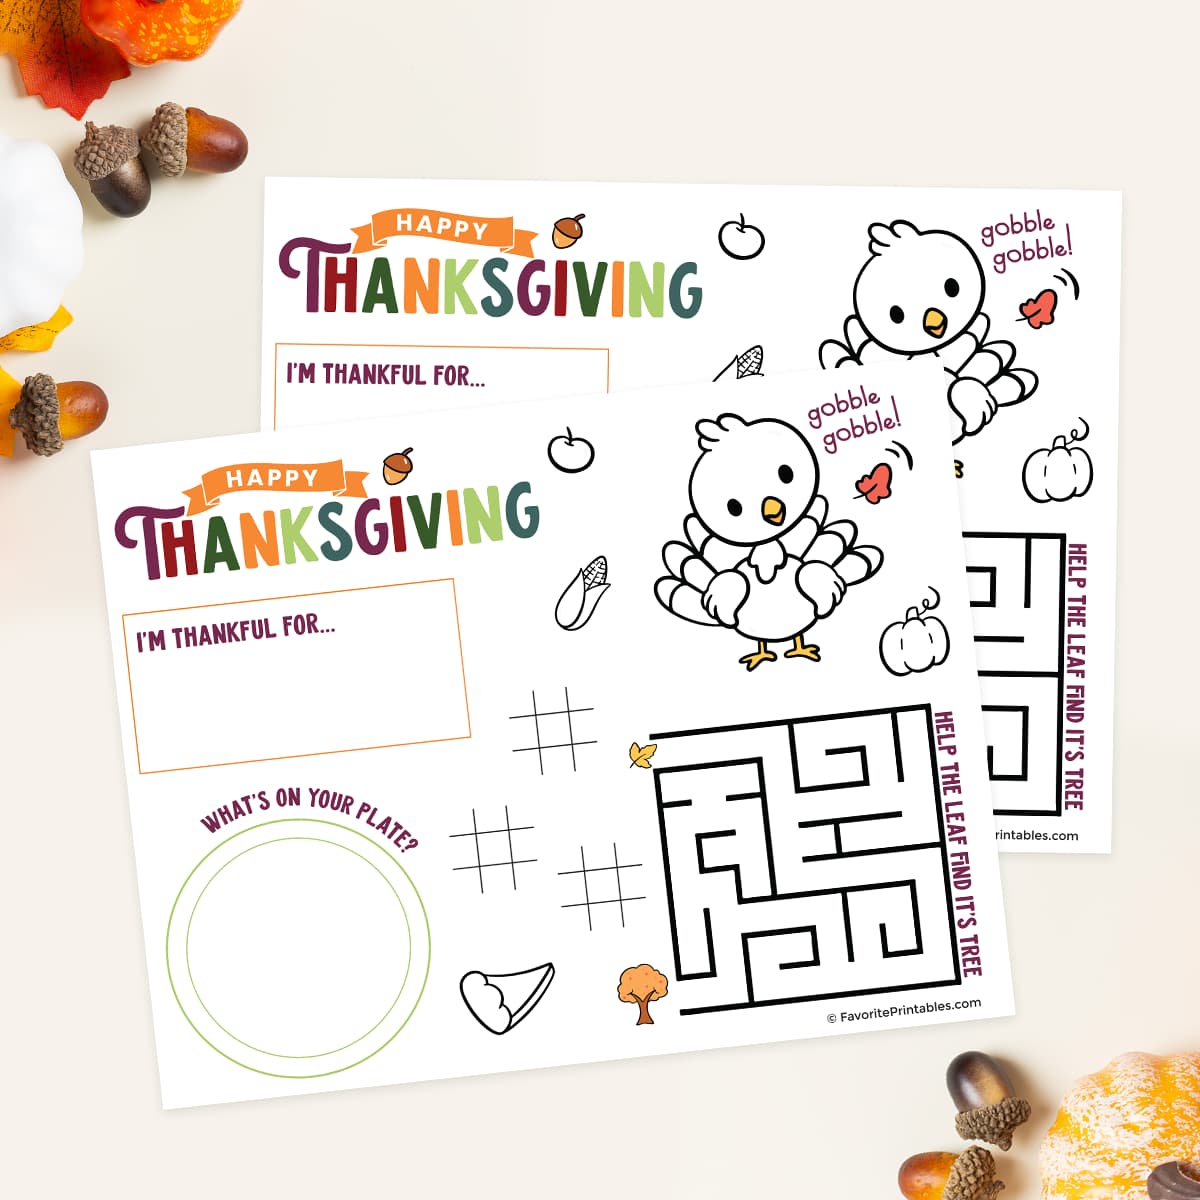 Thanksgiving activity sheet printable set.